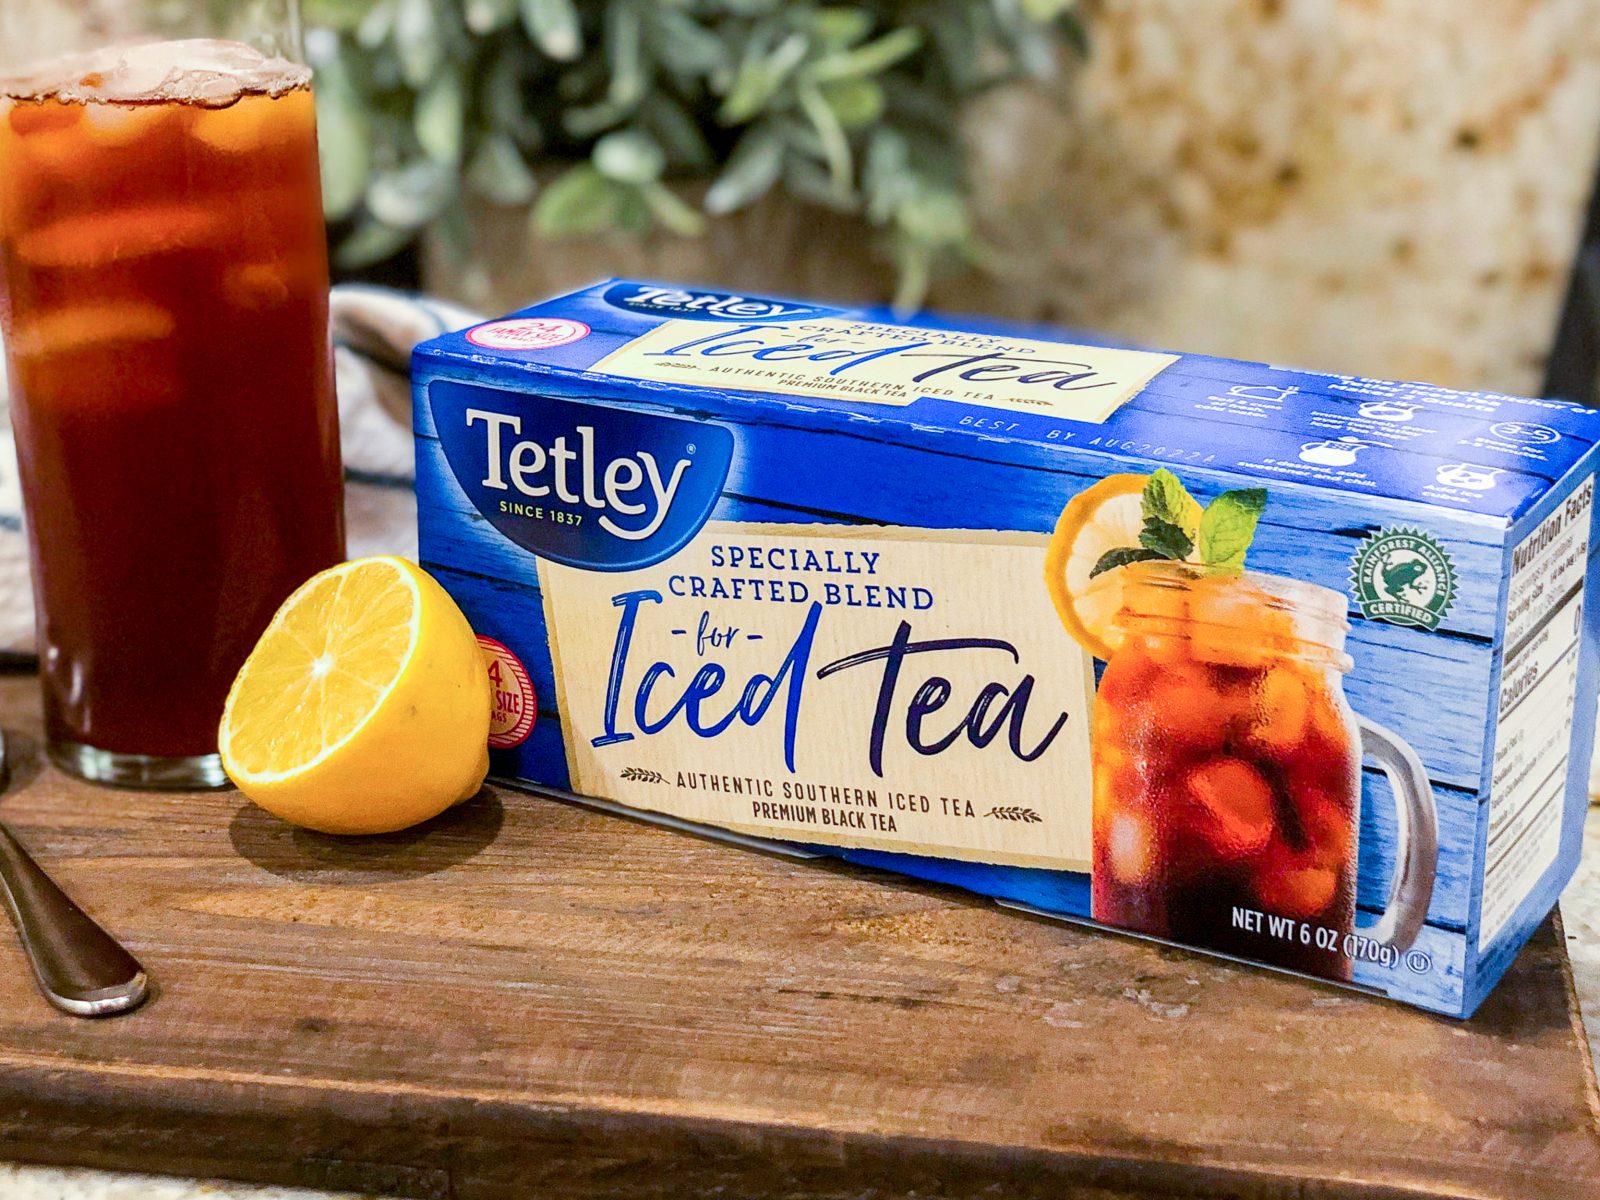 Tetley Tea Coupon Makes 24-Count Box Just $1.69 At Kroger